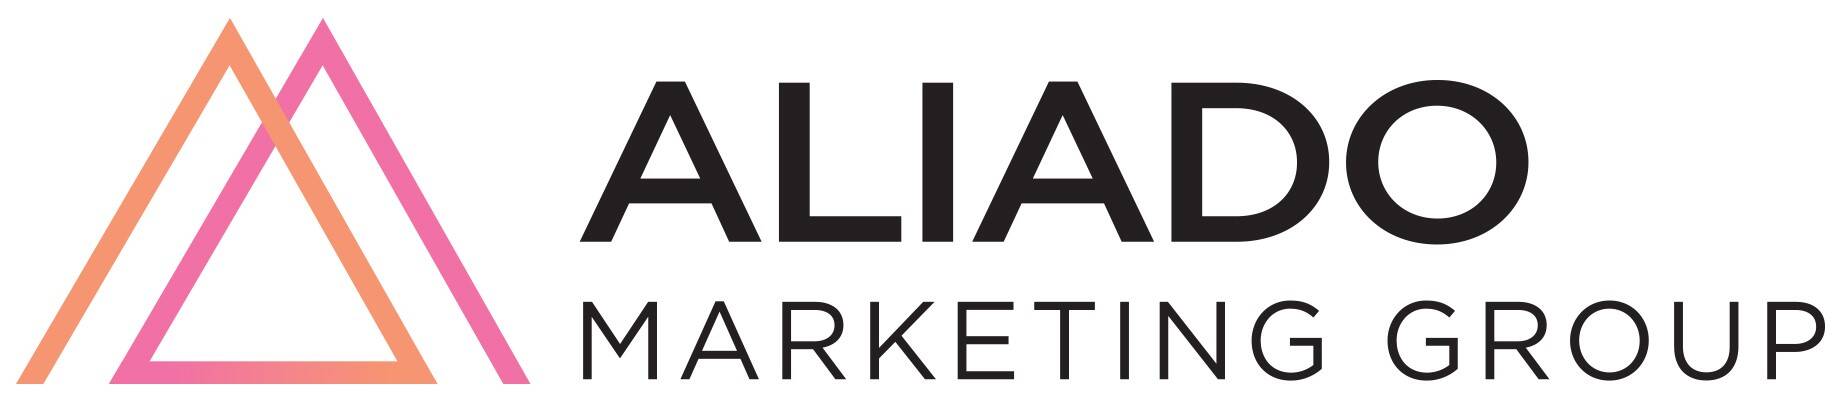 Aliado Marketing Group